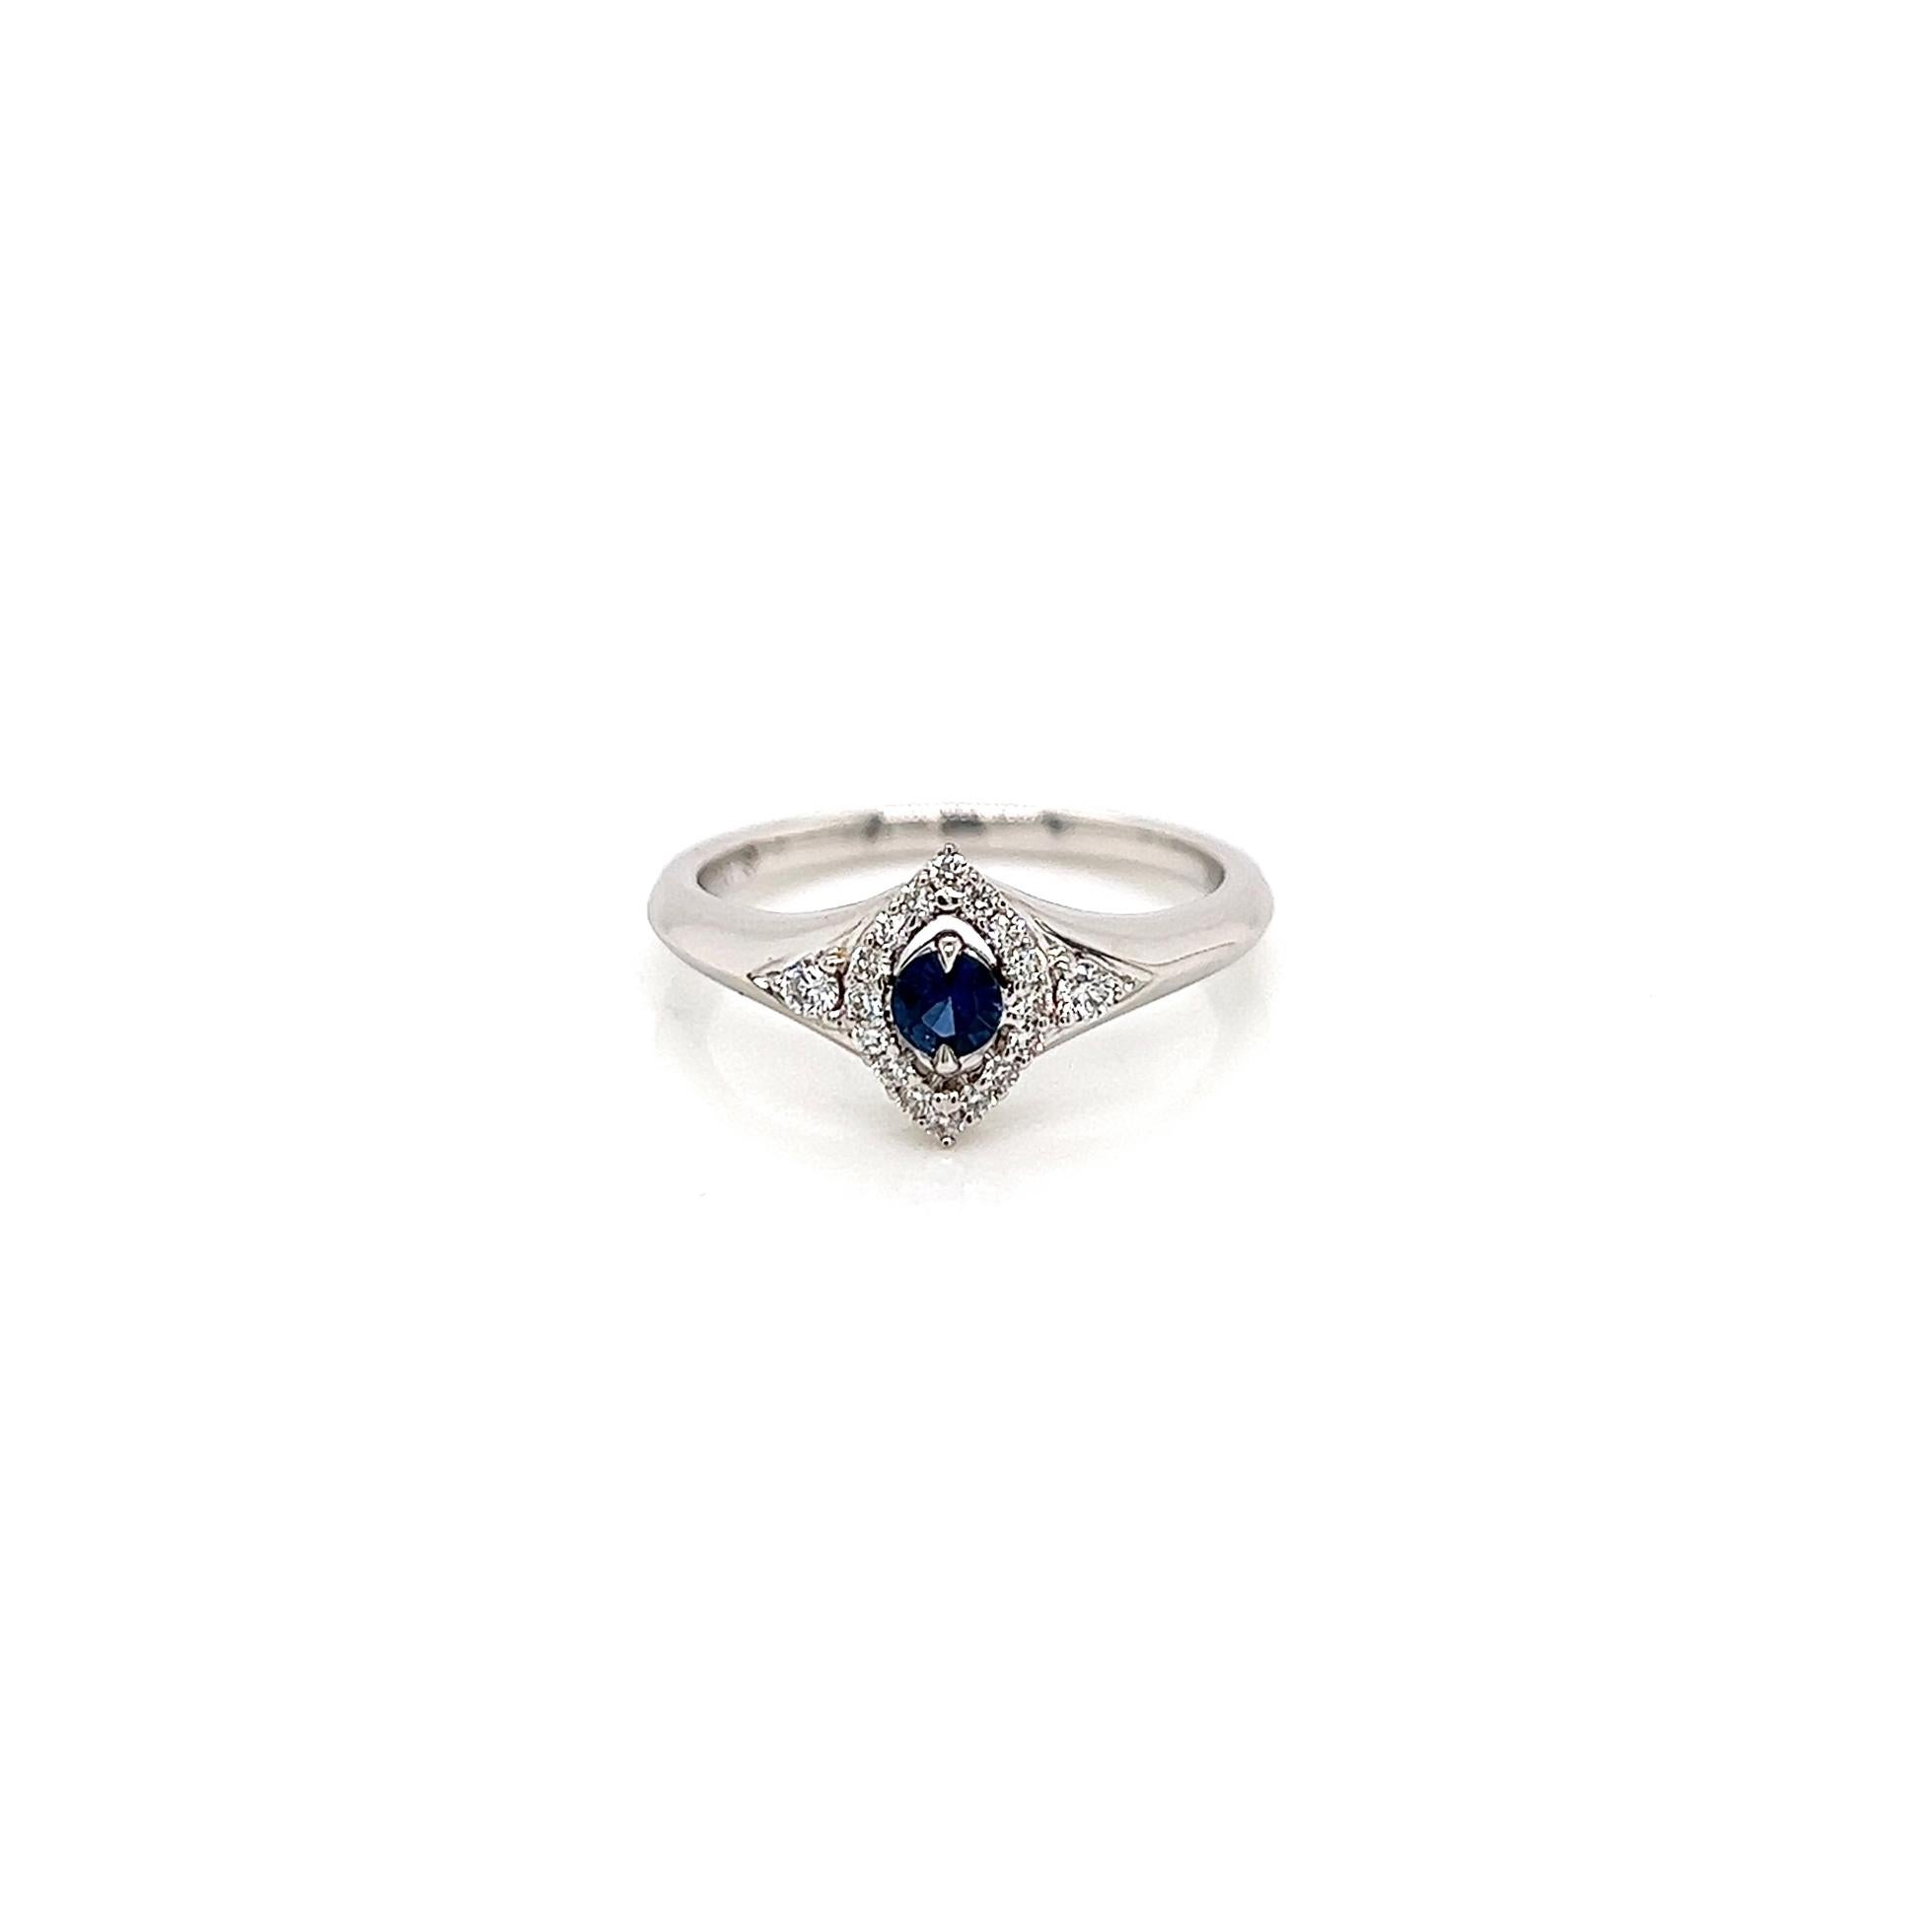 0.33 Total Carat Sapphire Diamond Halo Engagement Ring

-Metal Type: 18K White Gold
-0.17 Carat Round Blue Sapphire
-0.16 Carat Round Side Diamonds 
-Size 6.75

Made in New York City.